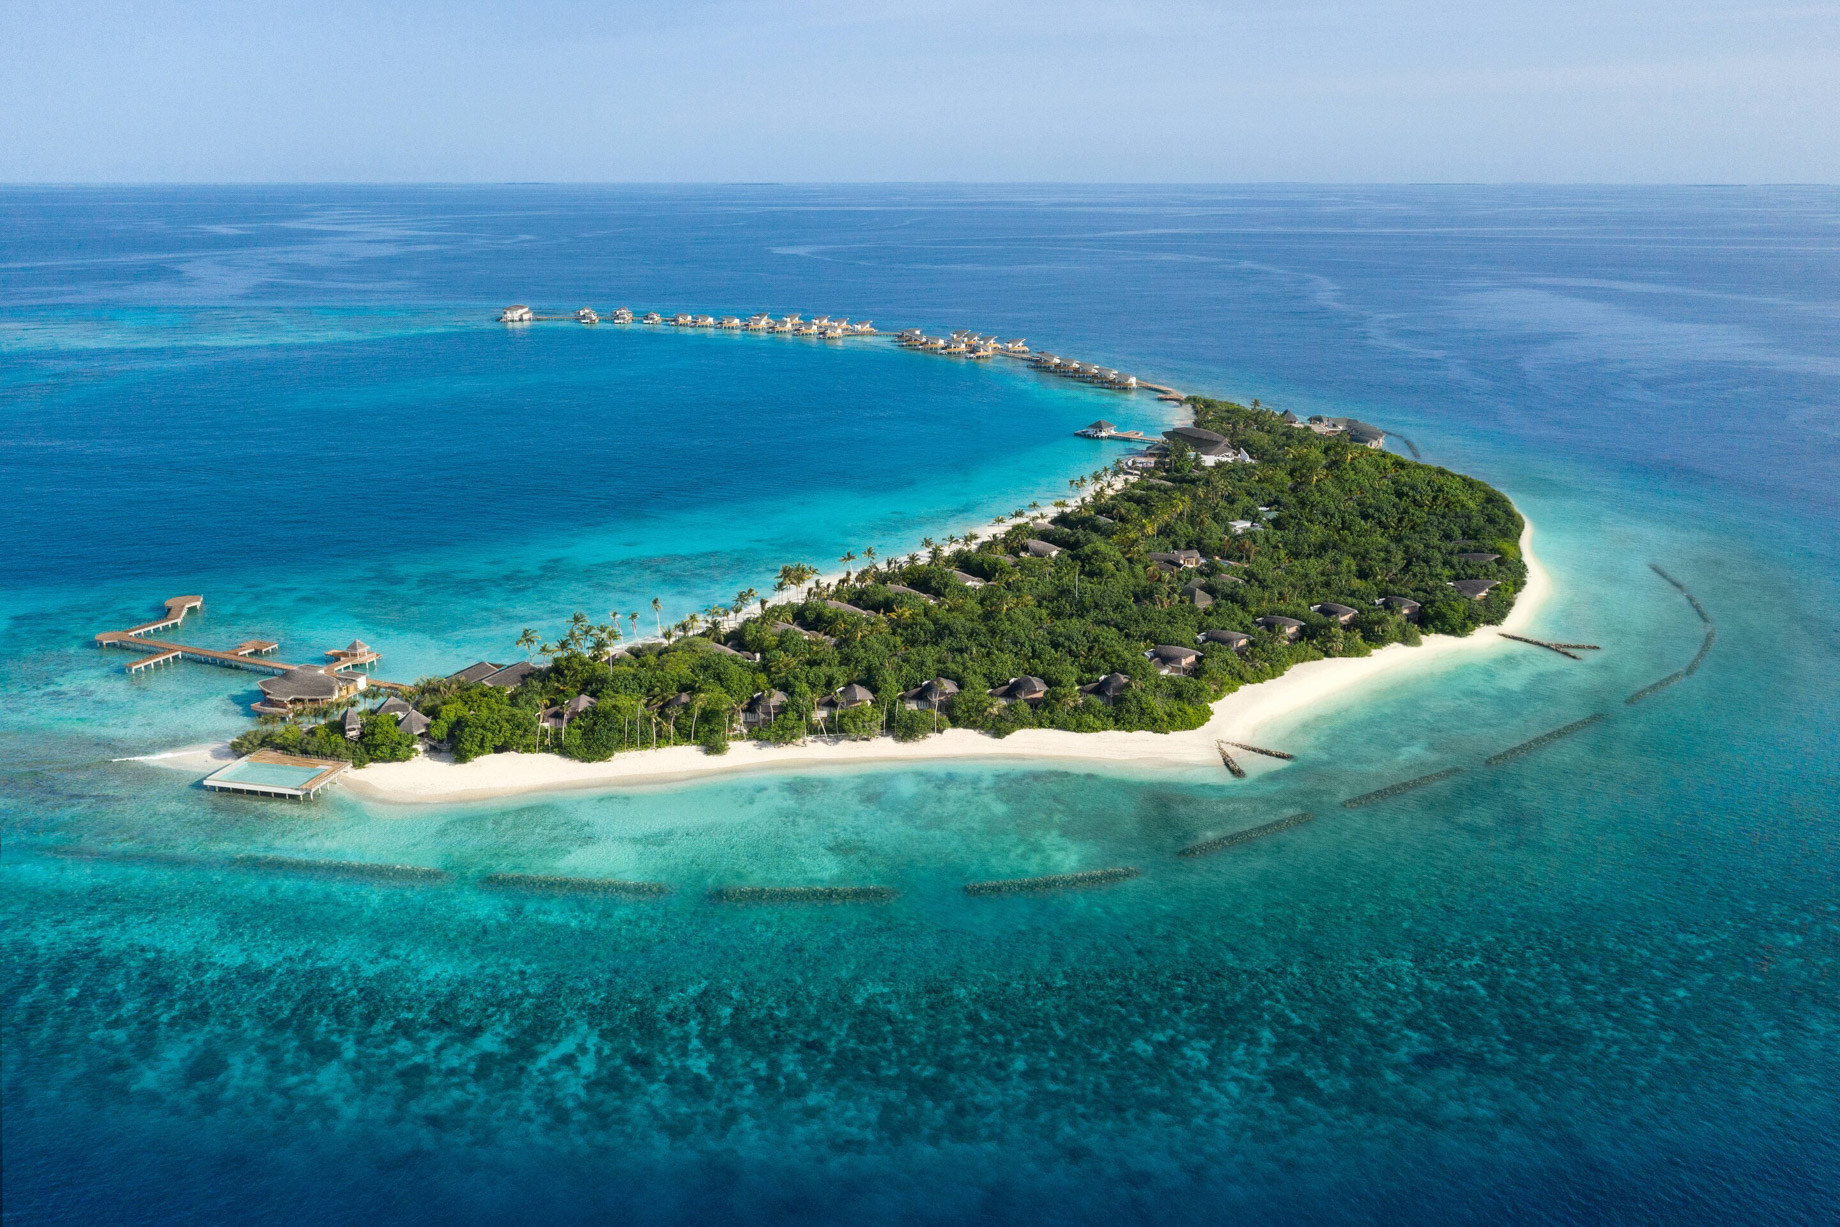 JW Marriott Maldives Resort & Spa - Shaviyani Atoll, Maldives - Resort Aerial View